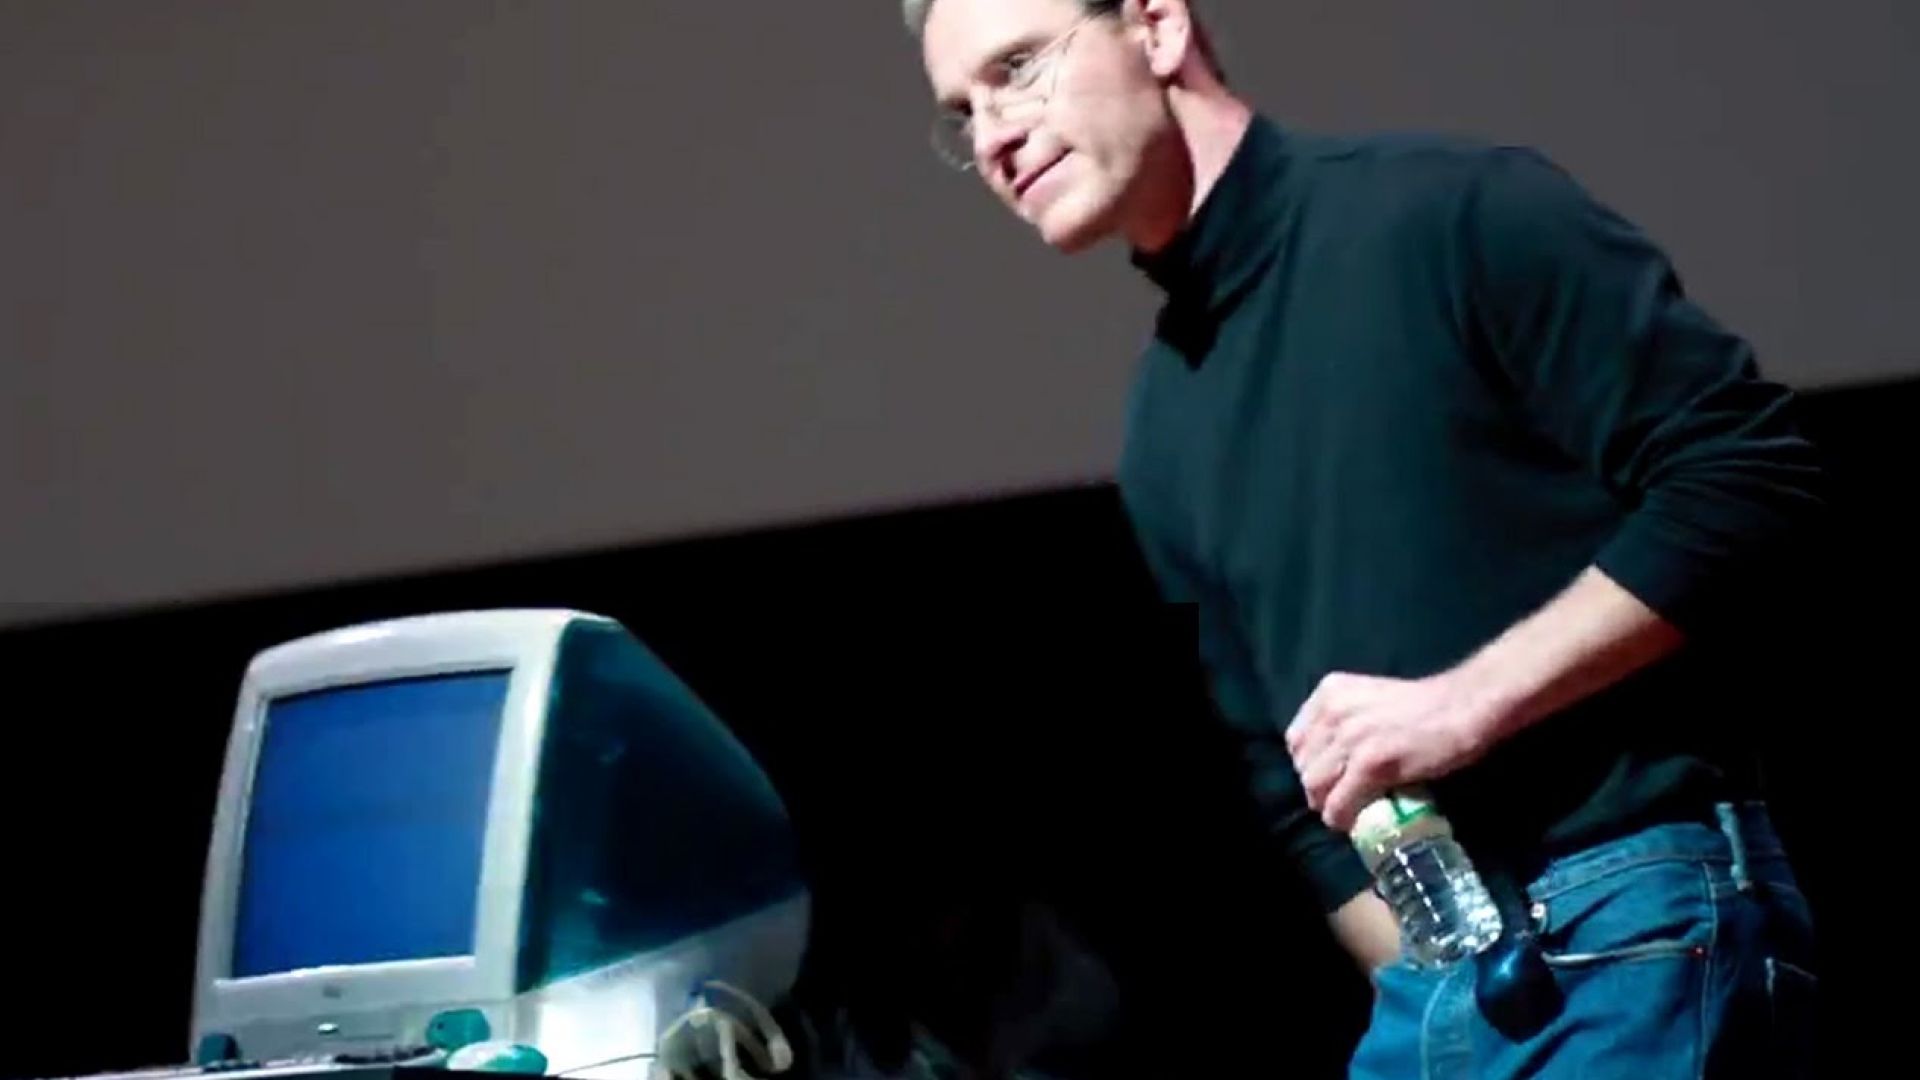 Full Steve Jobs trailer has Fassbender showing Jobs&#039; genius 